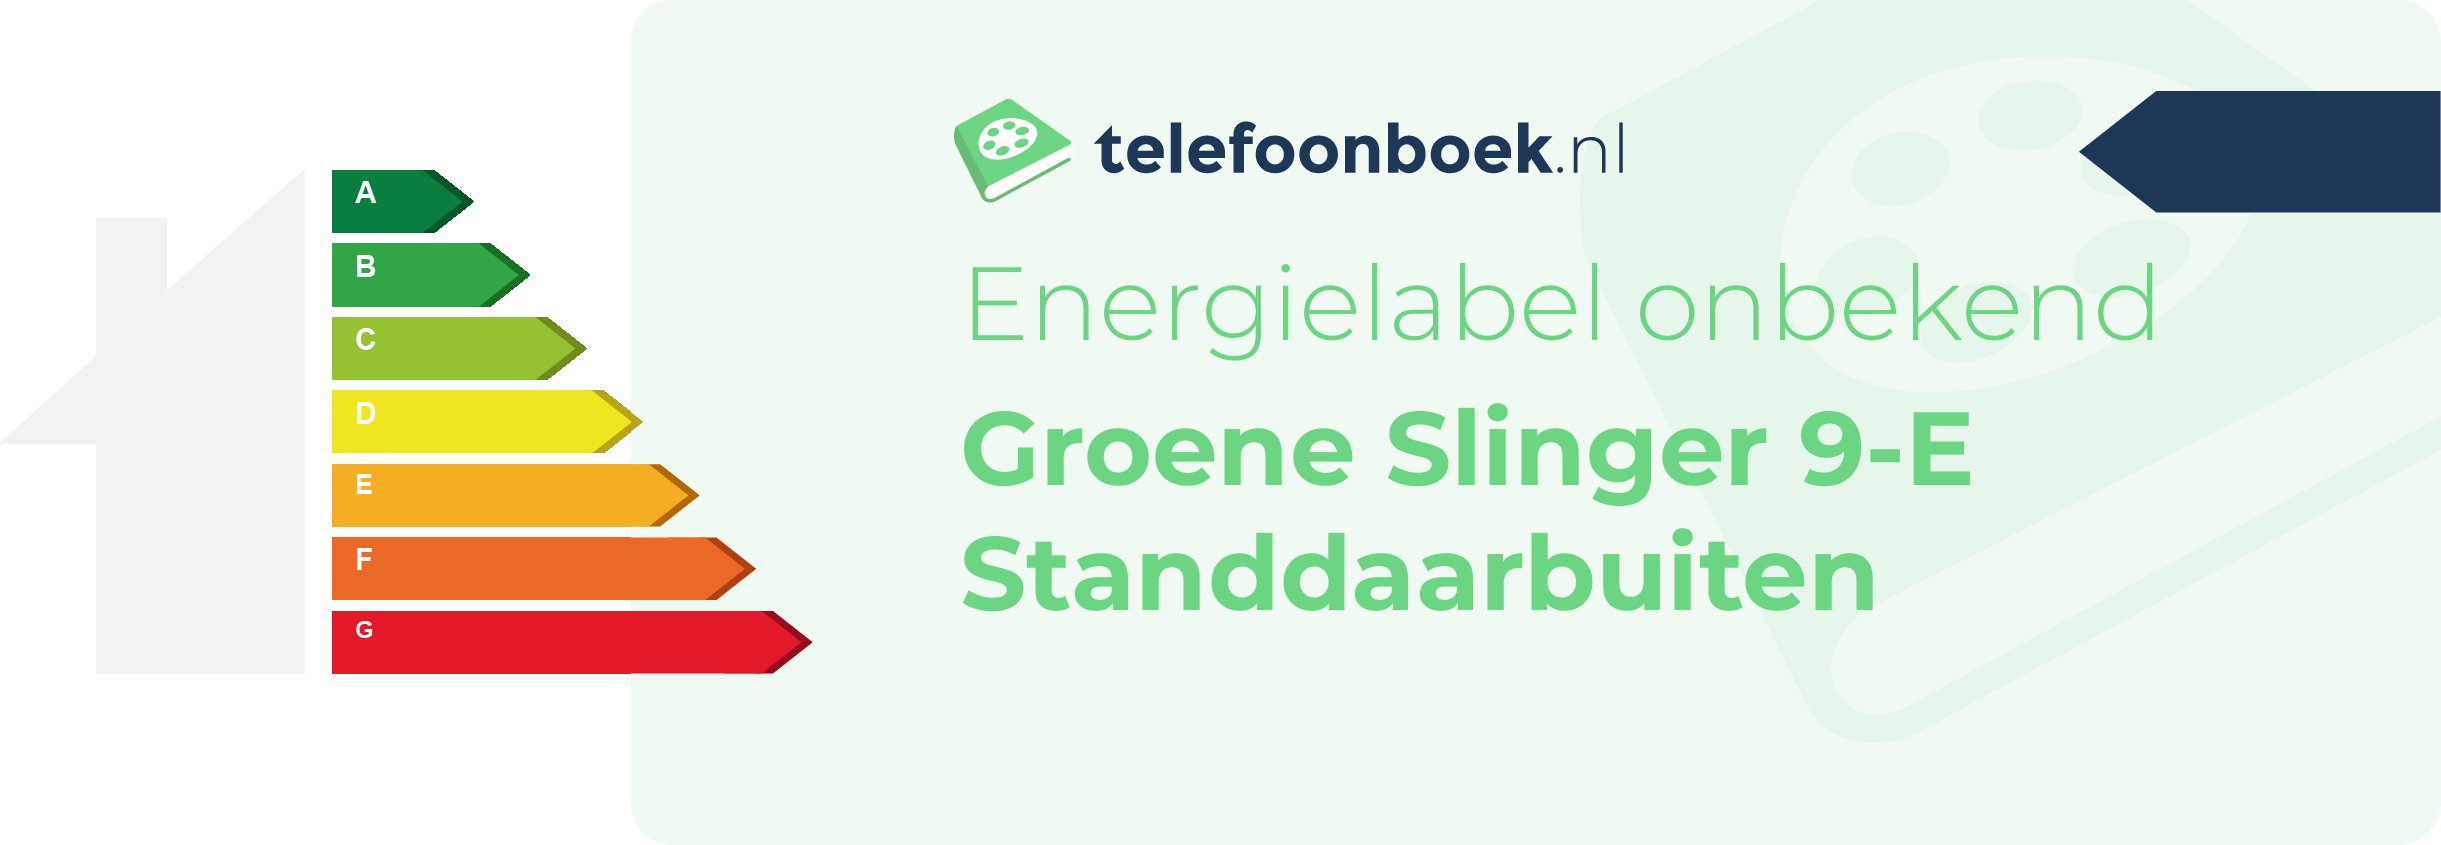 Energielabel Groene Slinger 9-E Standdaarbuiten